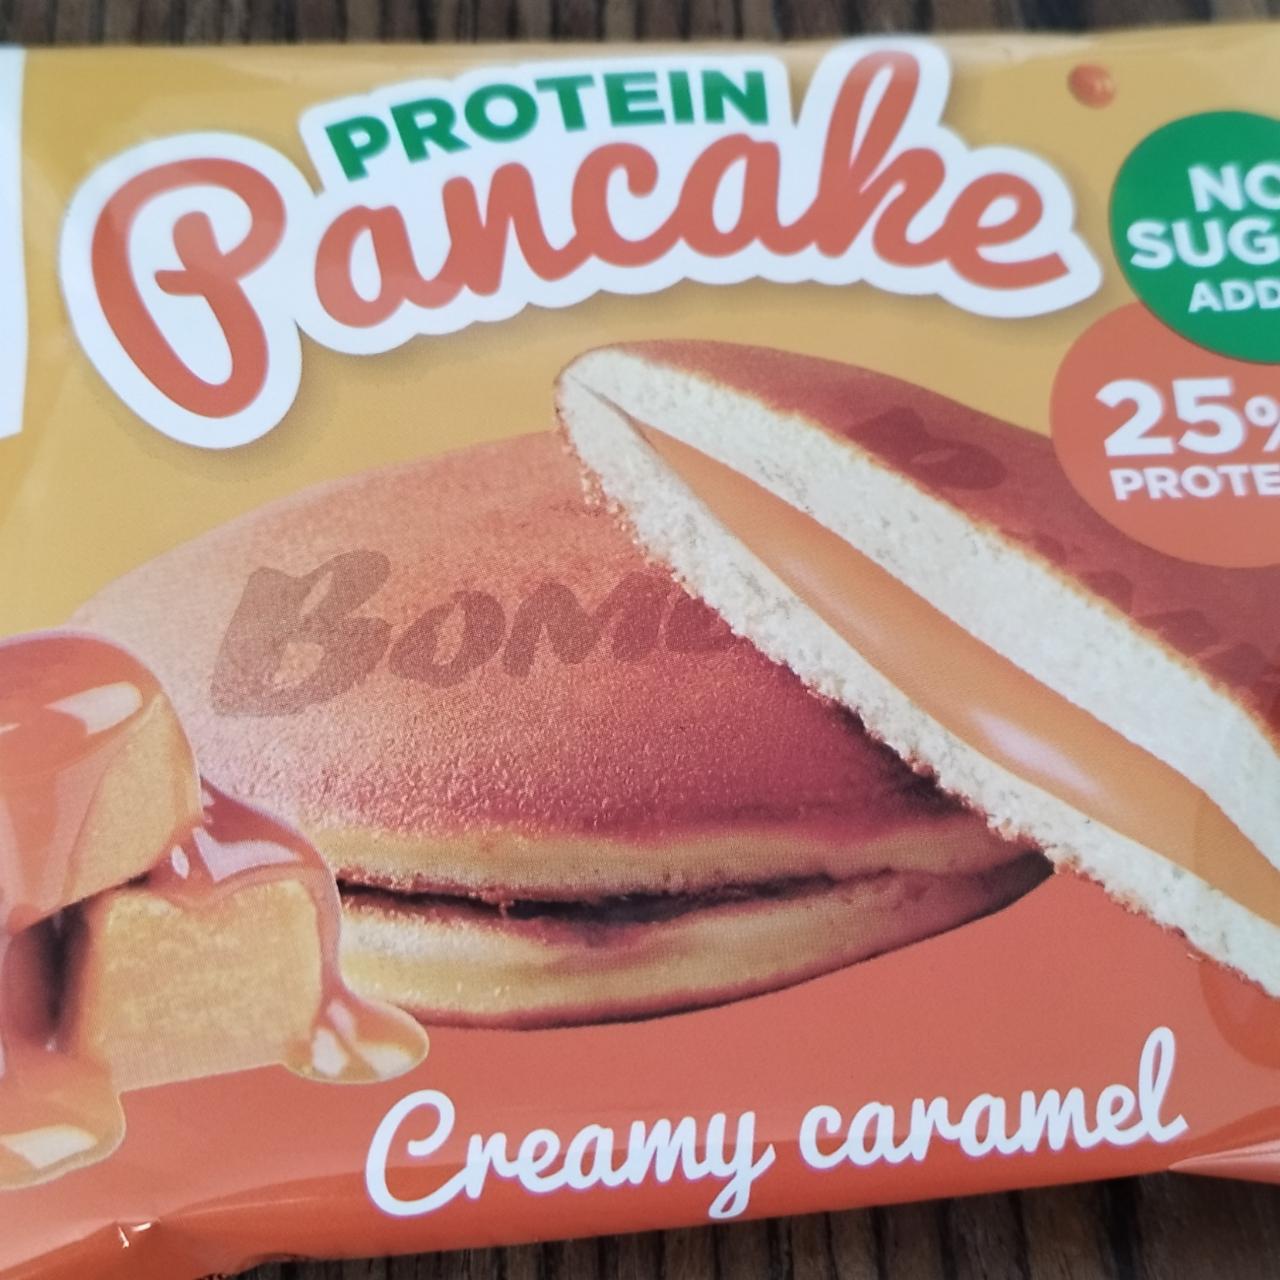 Fotografie - Protein pancake creamy caramel Bombbar